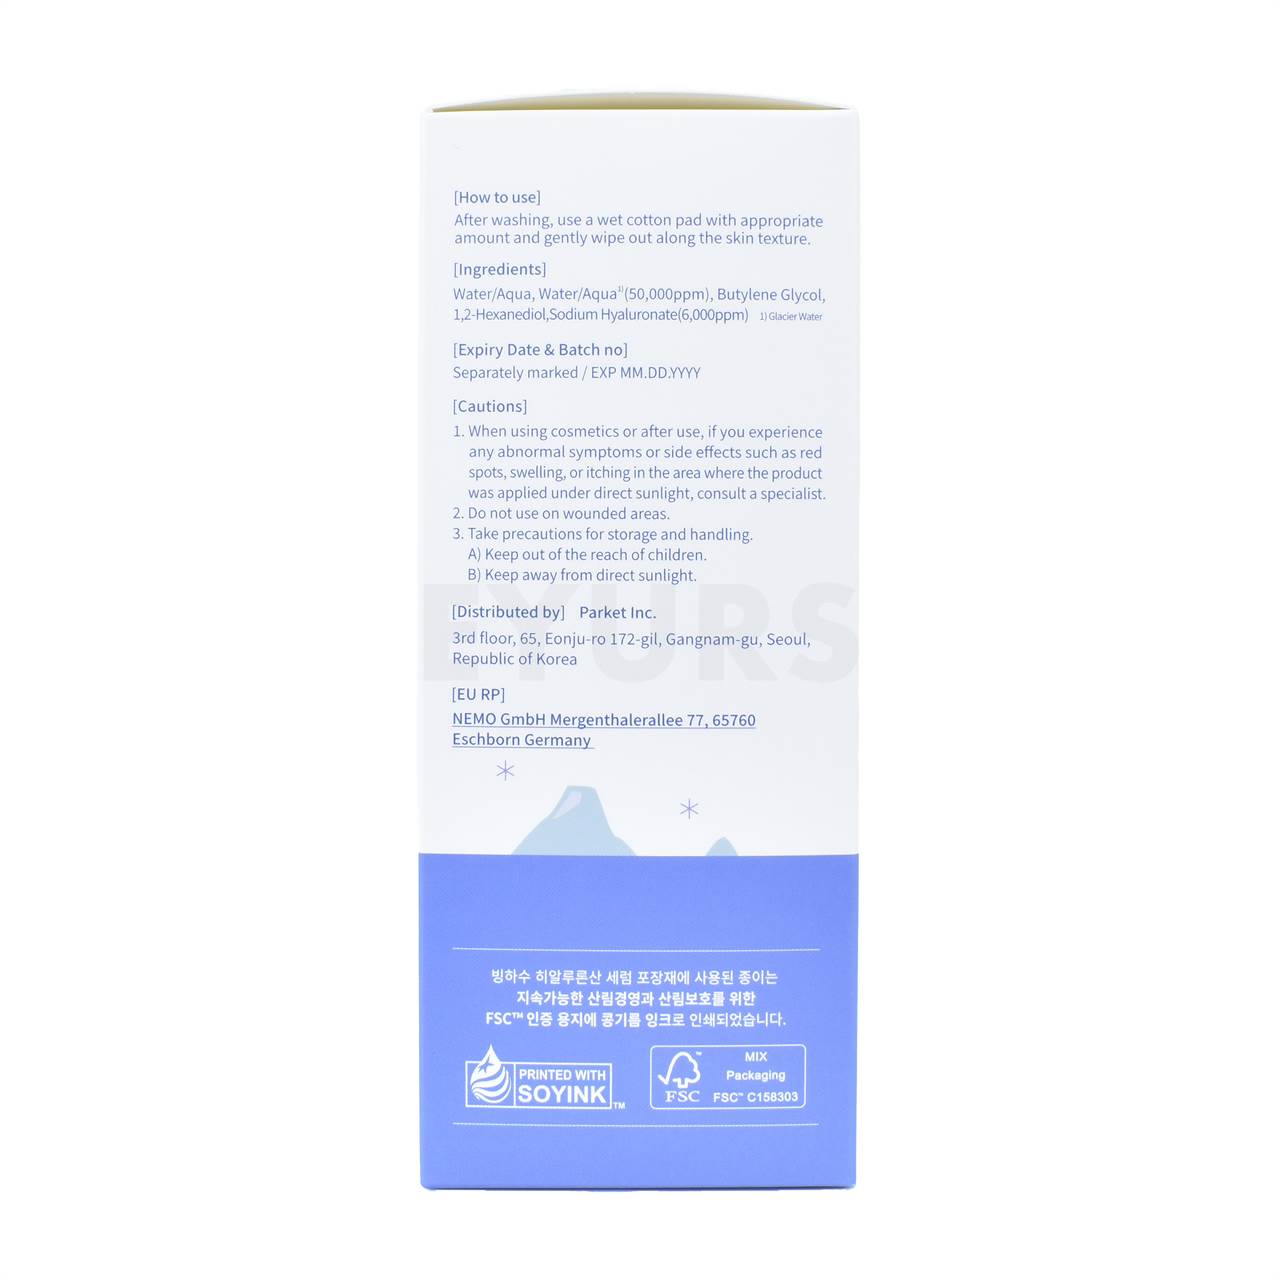 mixsoon glacier water hyaluronic acid serum 300ml left side packaging